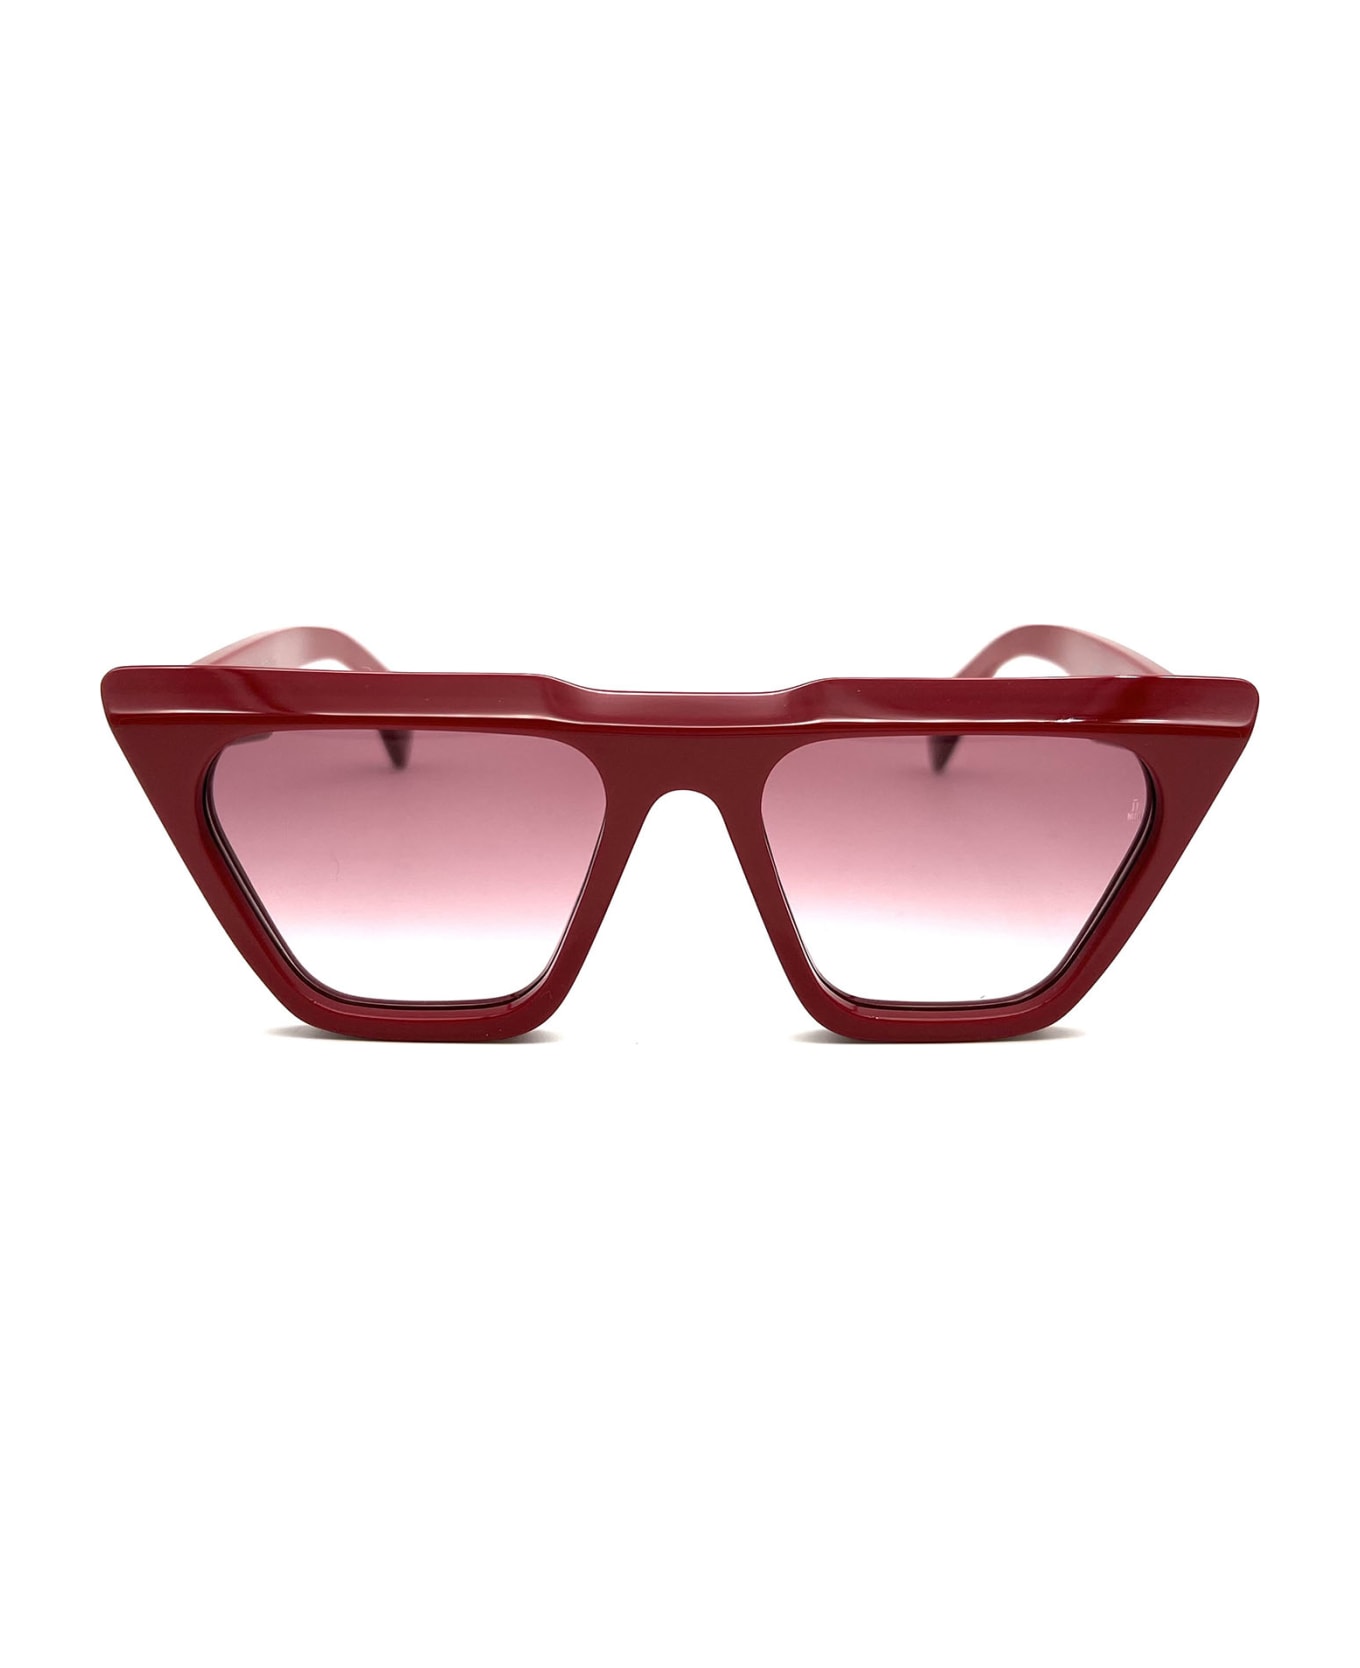 Jacques Marie Mage EVA Sunglasses - M Ruby,maroon G. サングラス